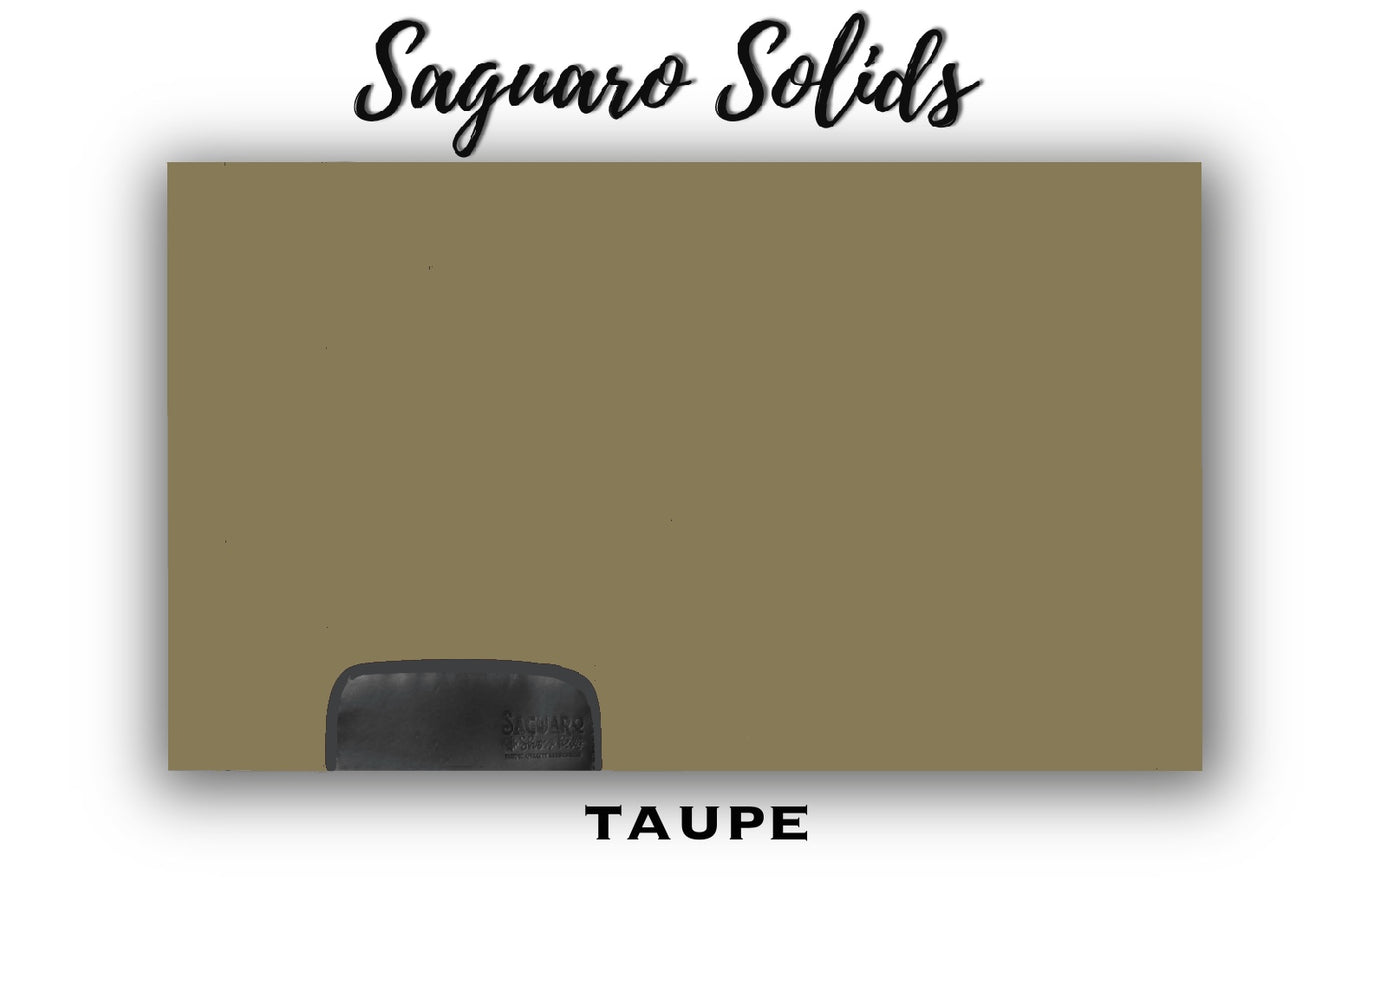 Saguaro Solid "Taupe" Show Pad (SEMI-CUSTOM)